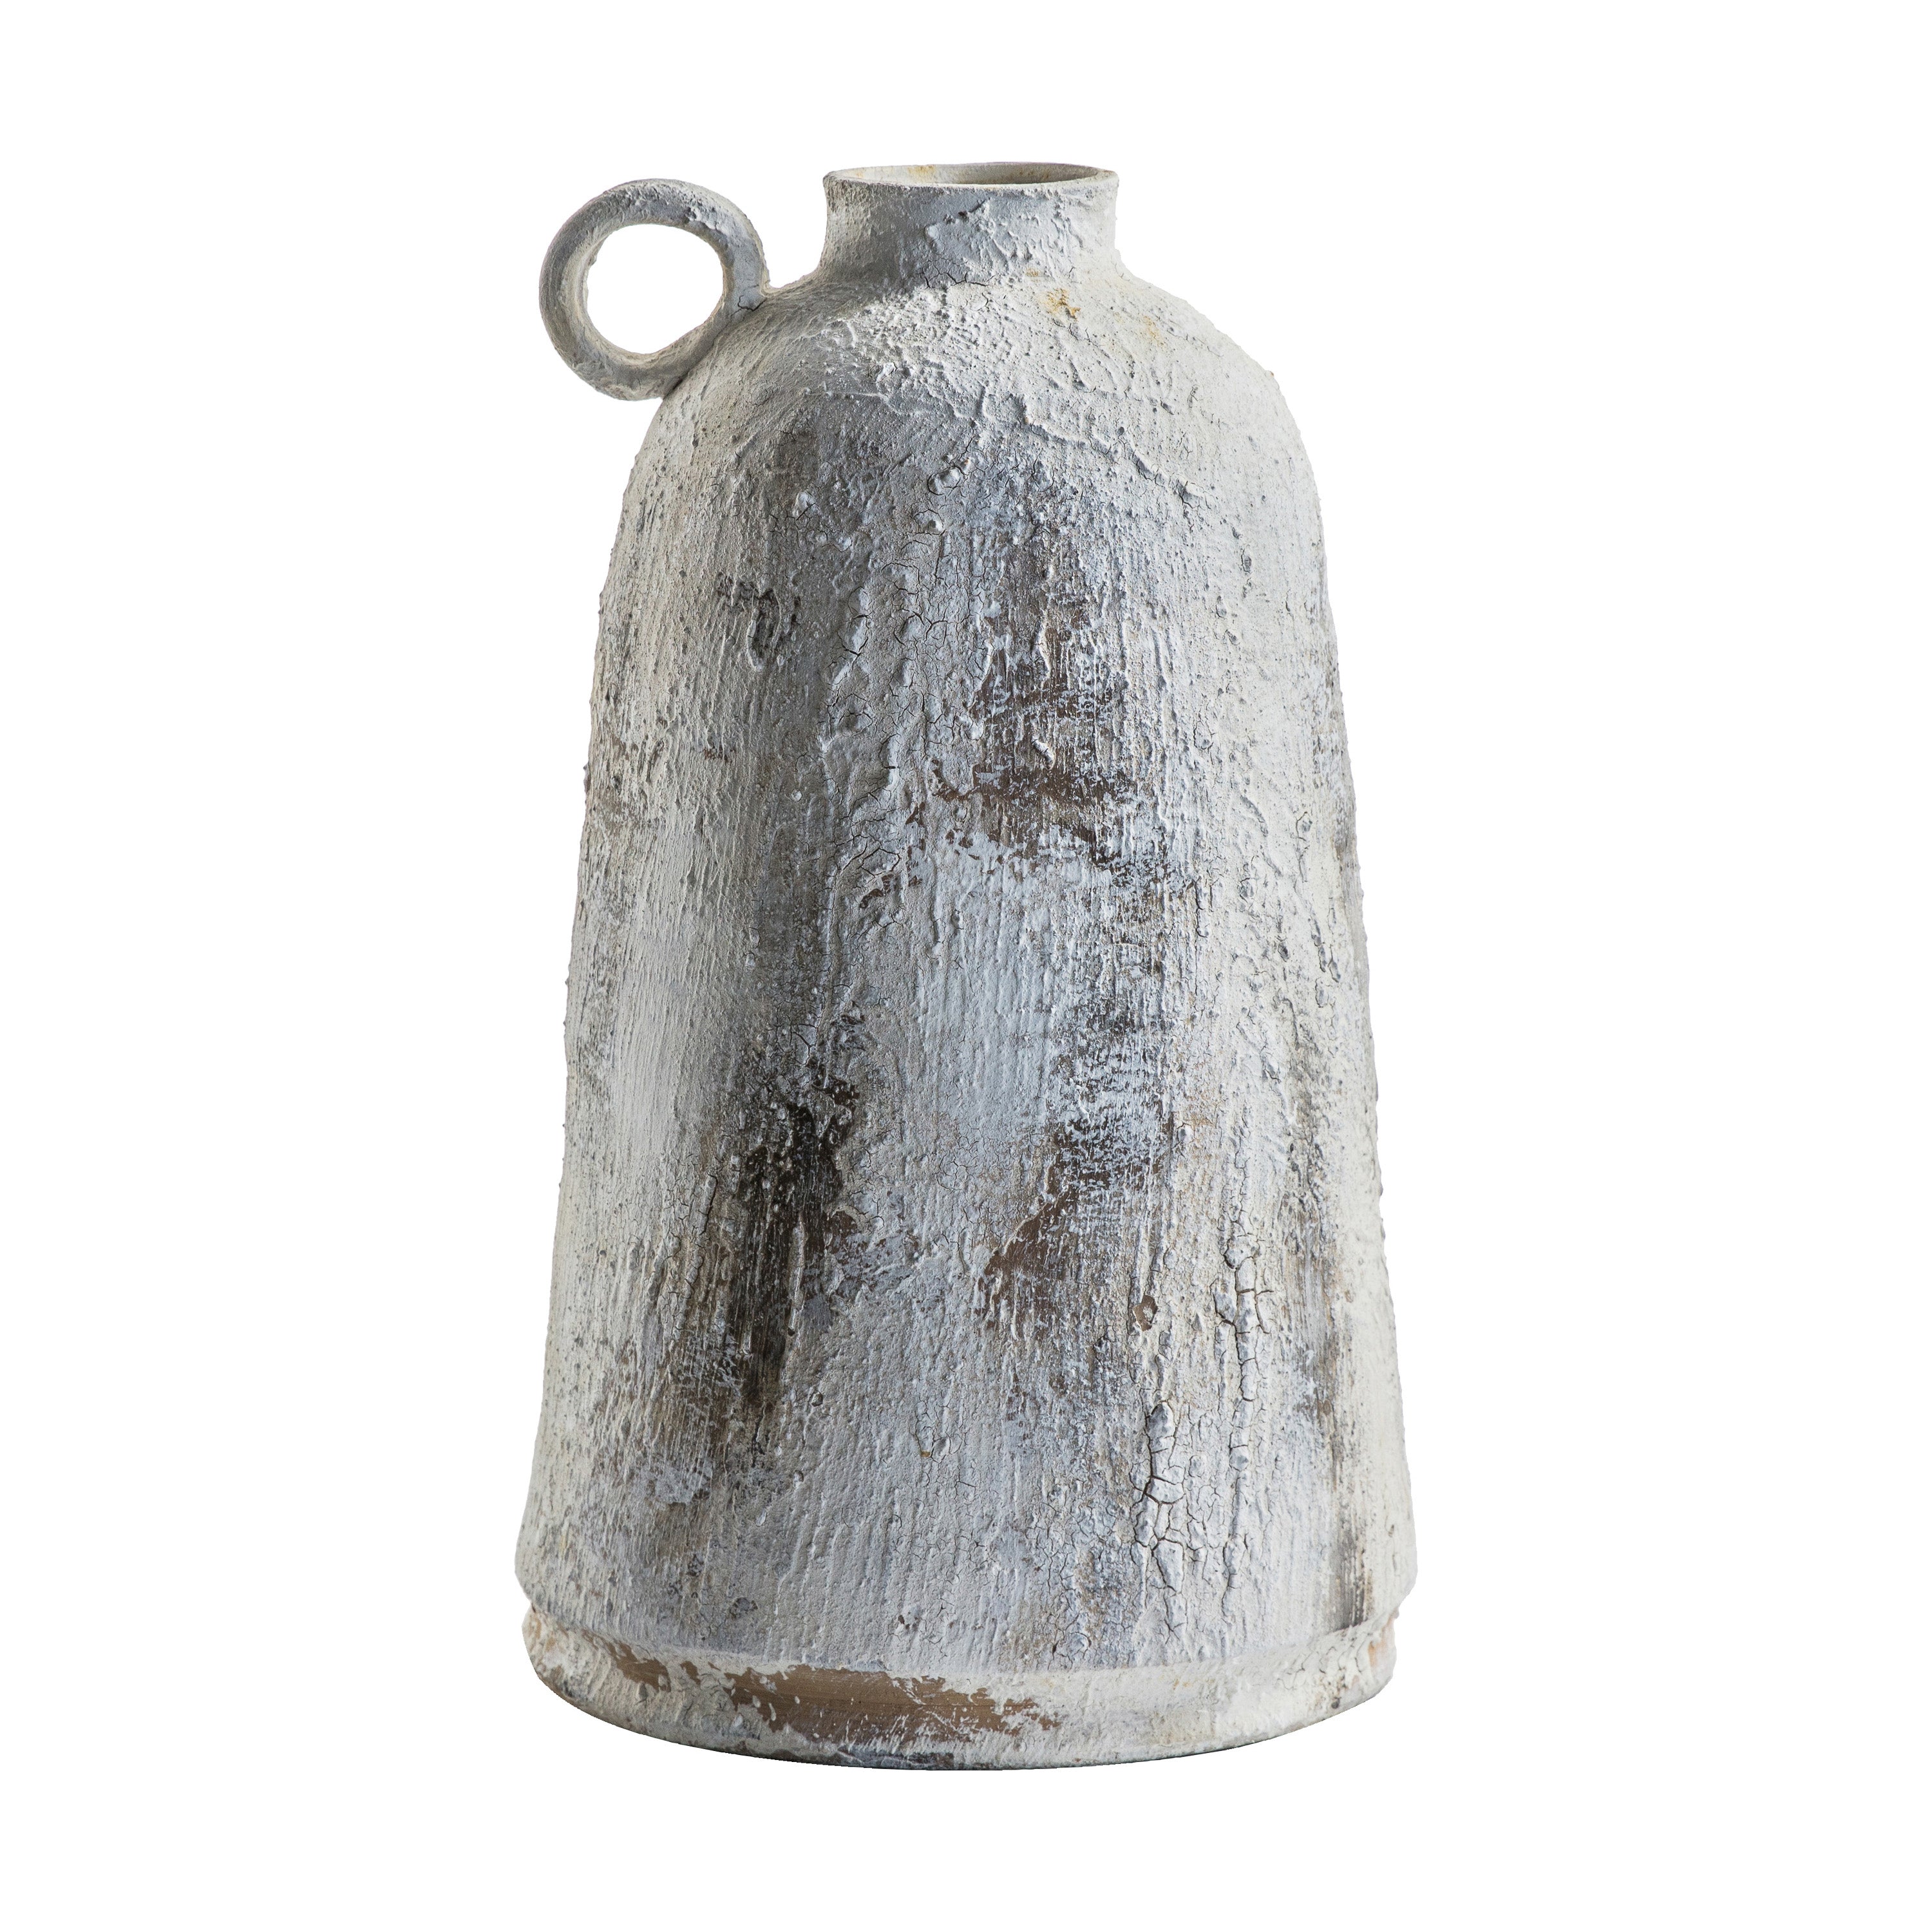 Image of Zen Collection Large Bottle Vase